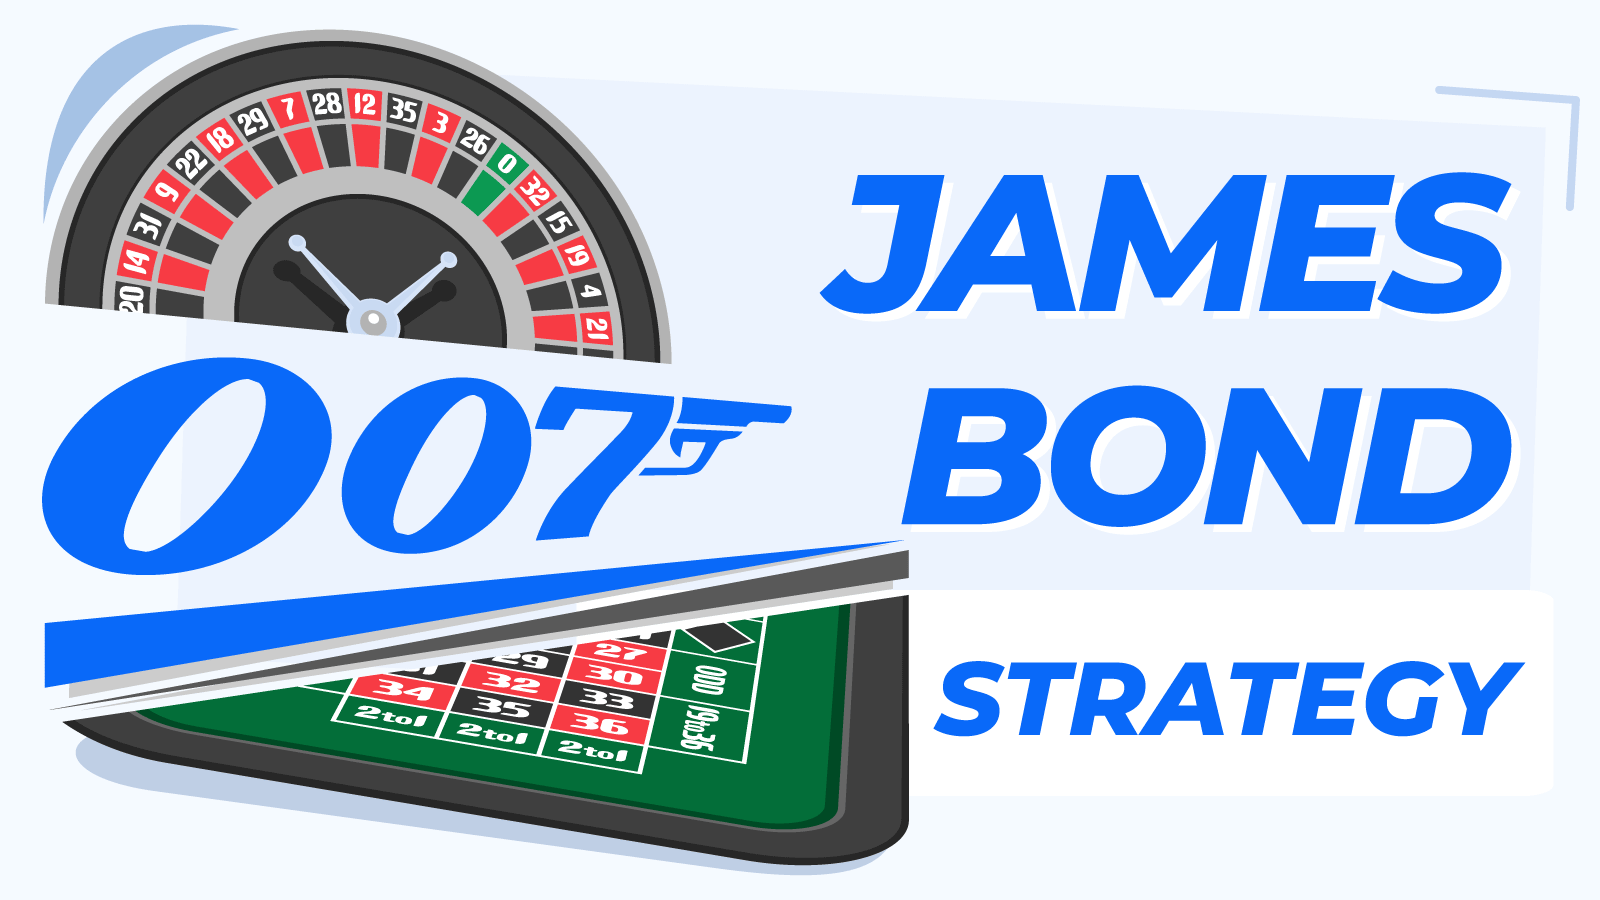 James Bond Roulette Strategy